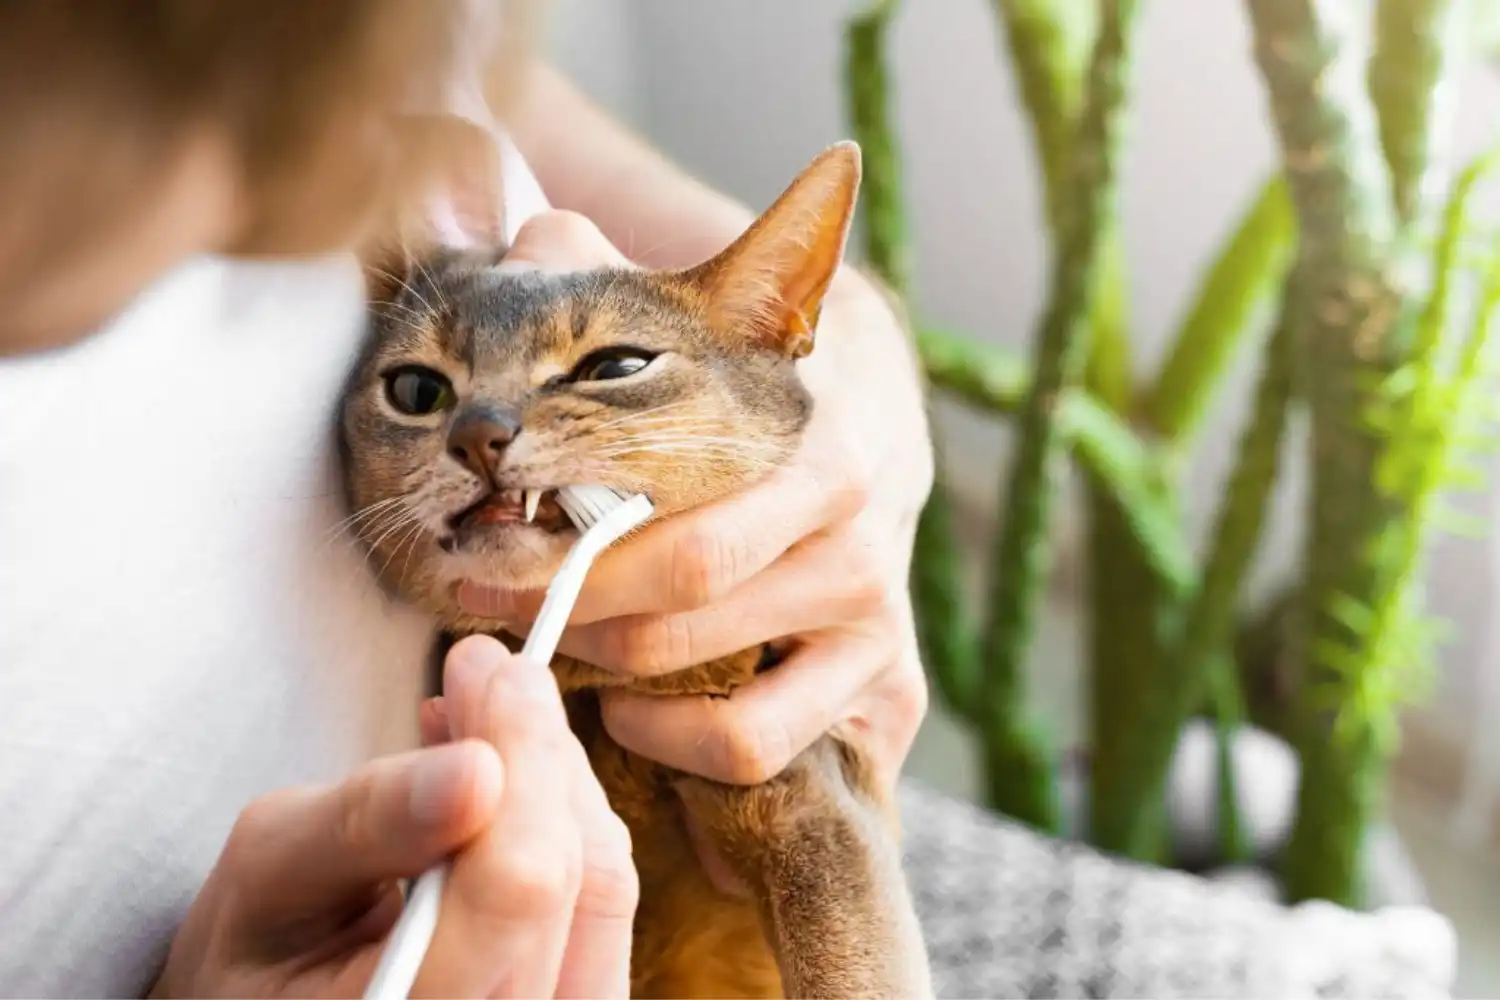 How to Brush Cat’s Teeth? - Step4: Brush Teeth Now